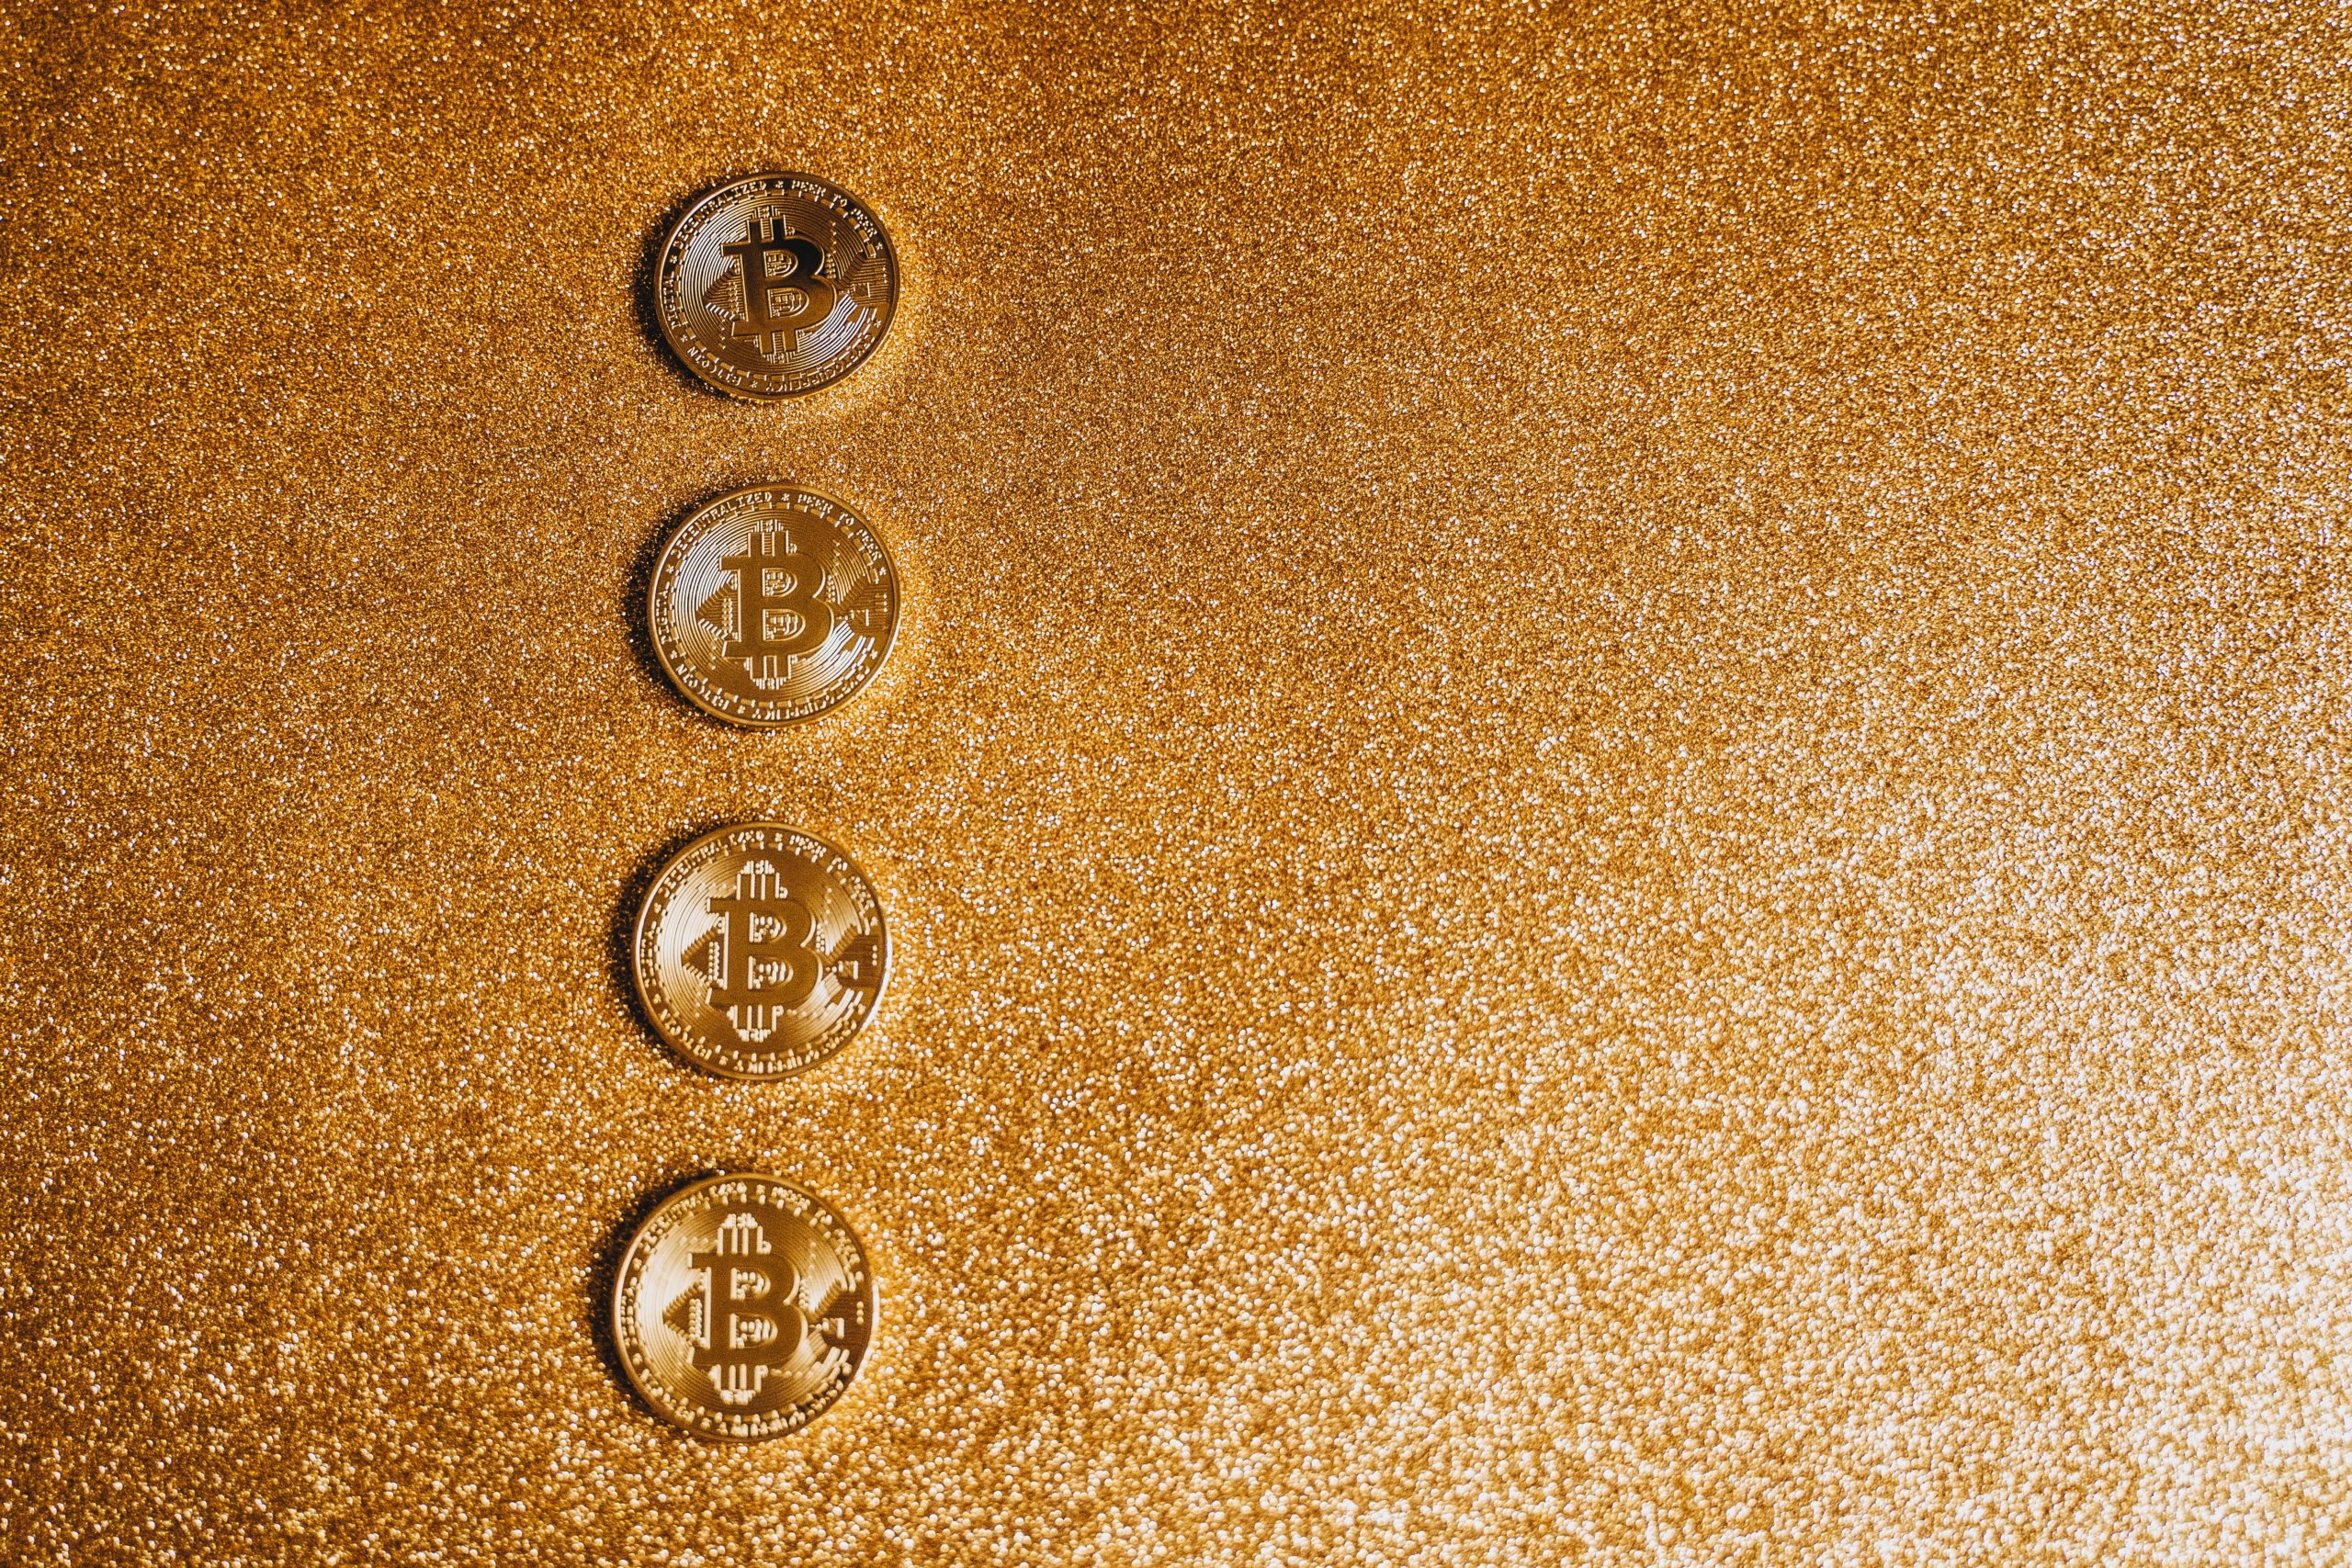 BlackRock Taps Coinbase to Facilitate Bitcoin Purchases